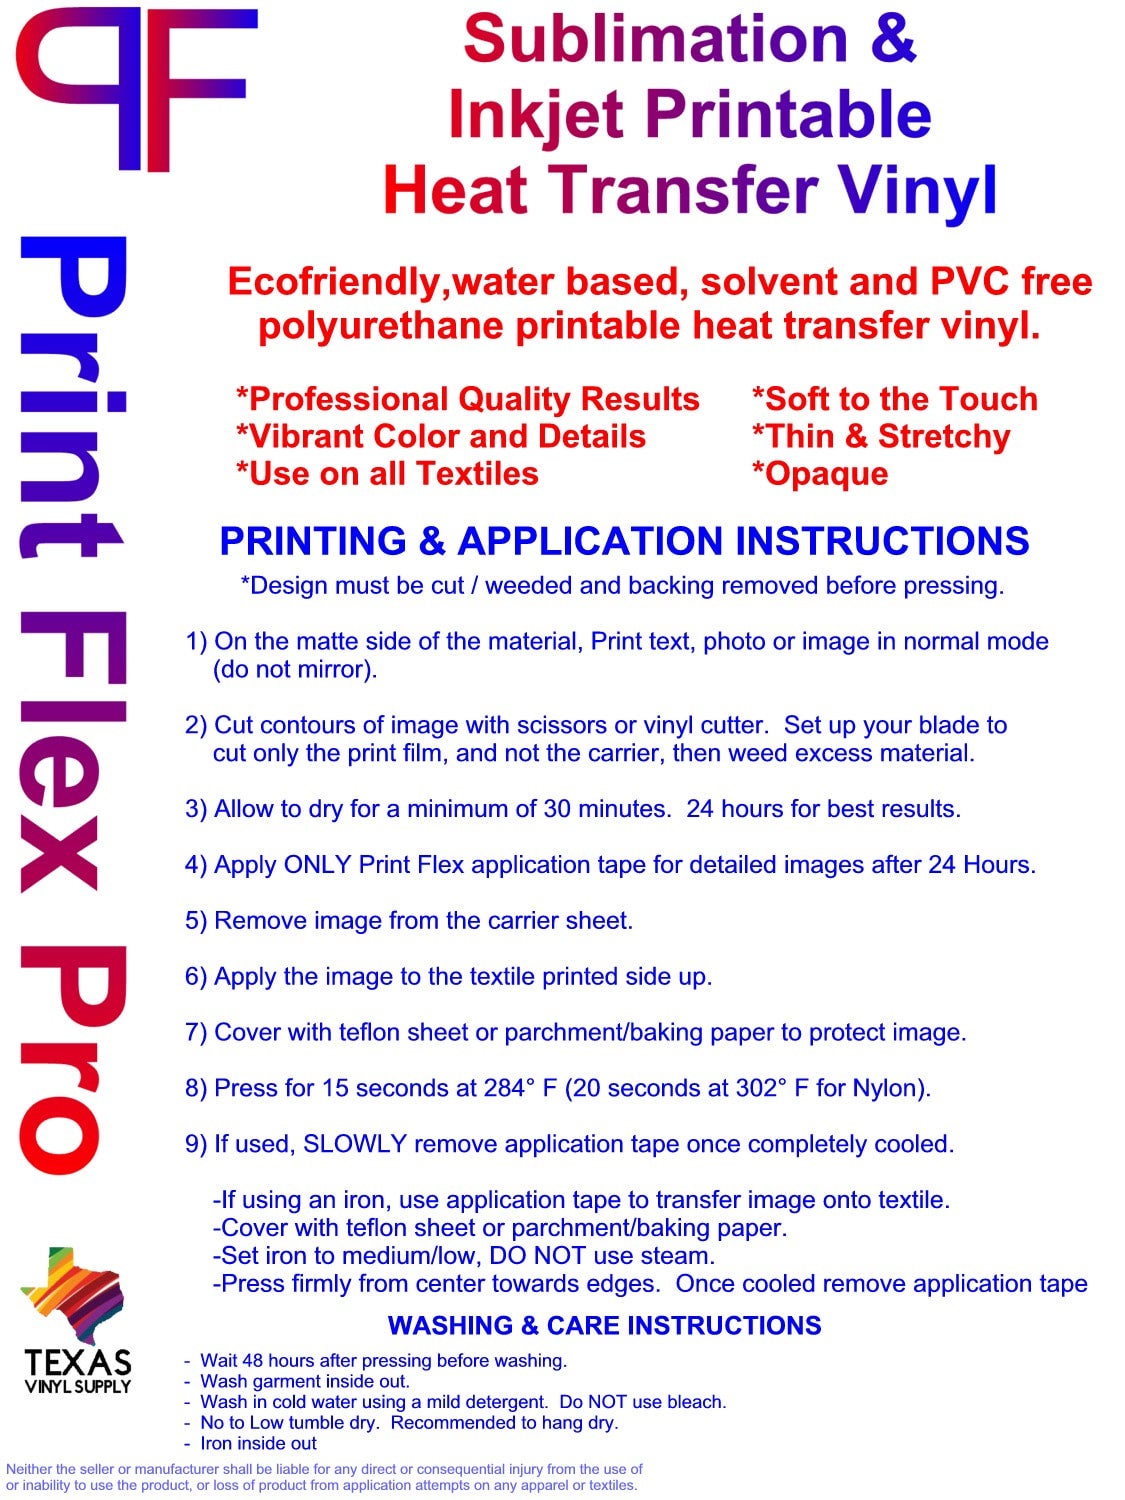 StarCraft Inkjet Printable Heat Transfer Craft Vinyl 8.5 x 11